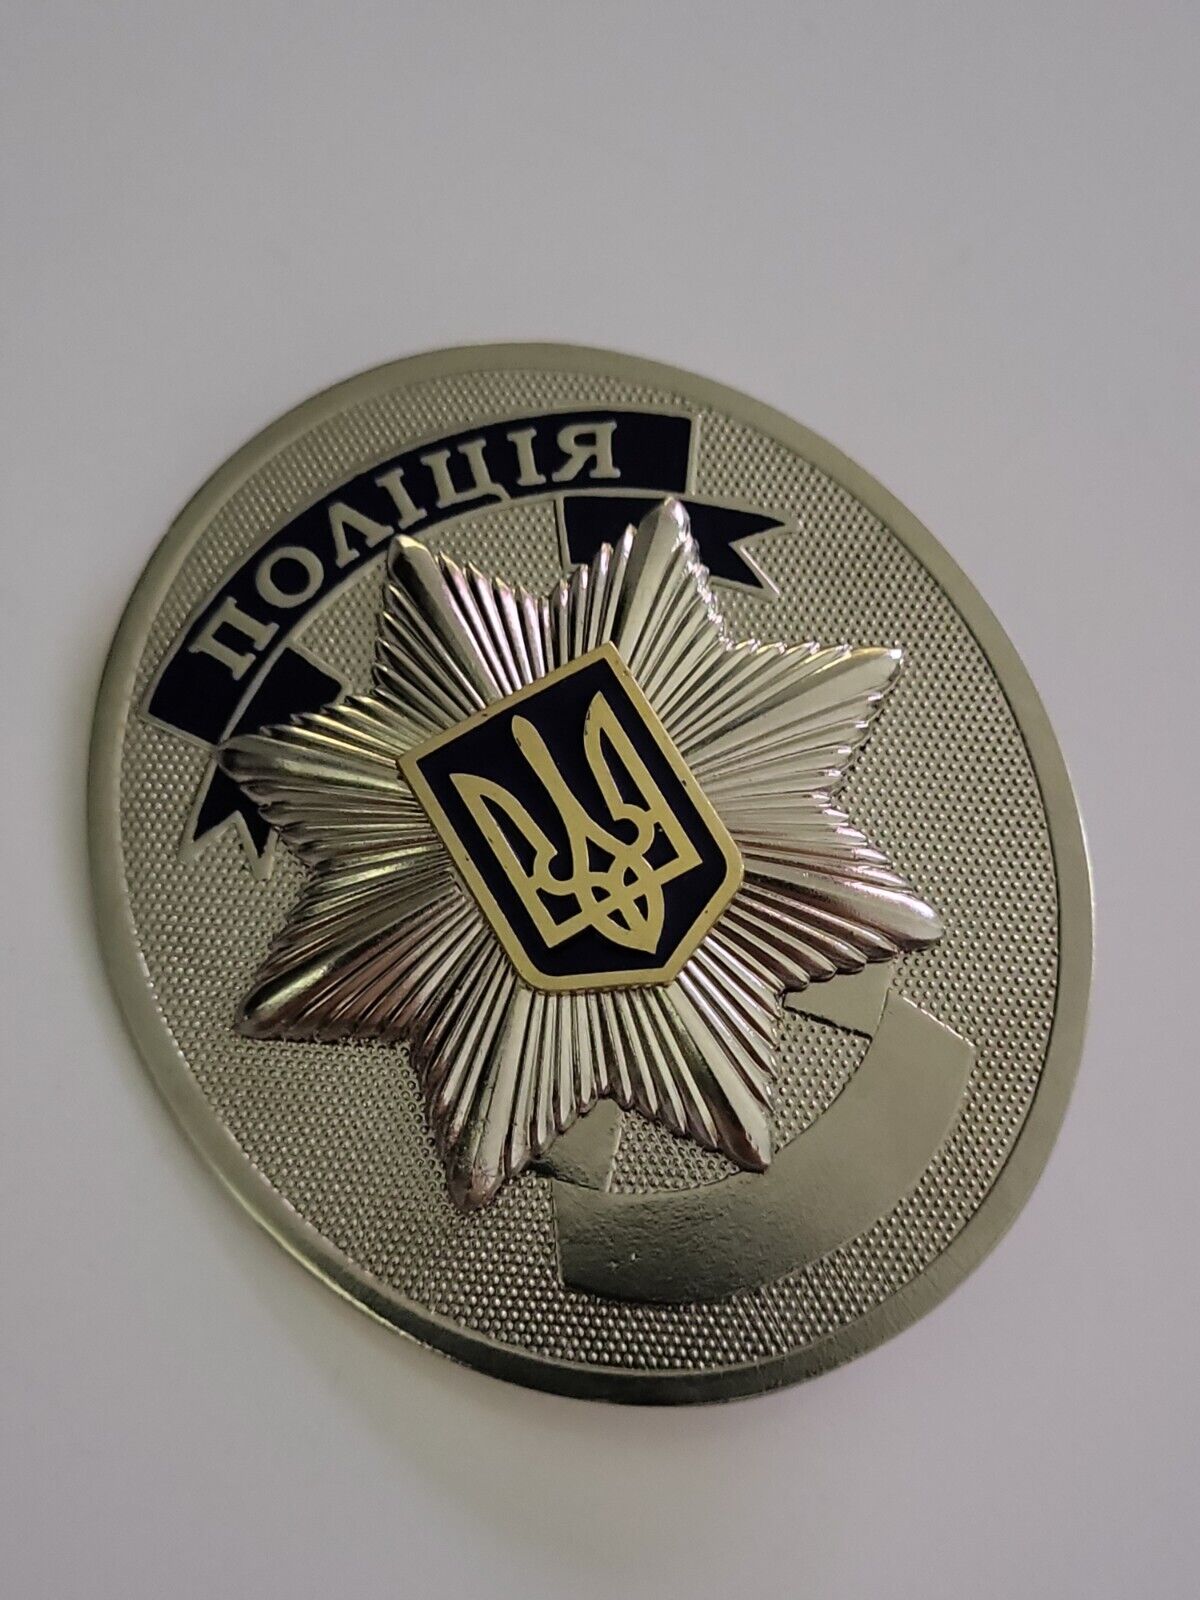  Badge of the Policeman of Ukraine , metal